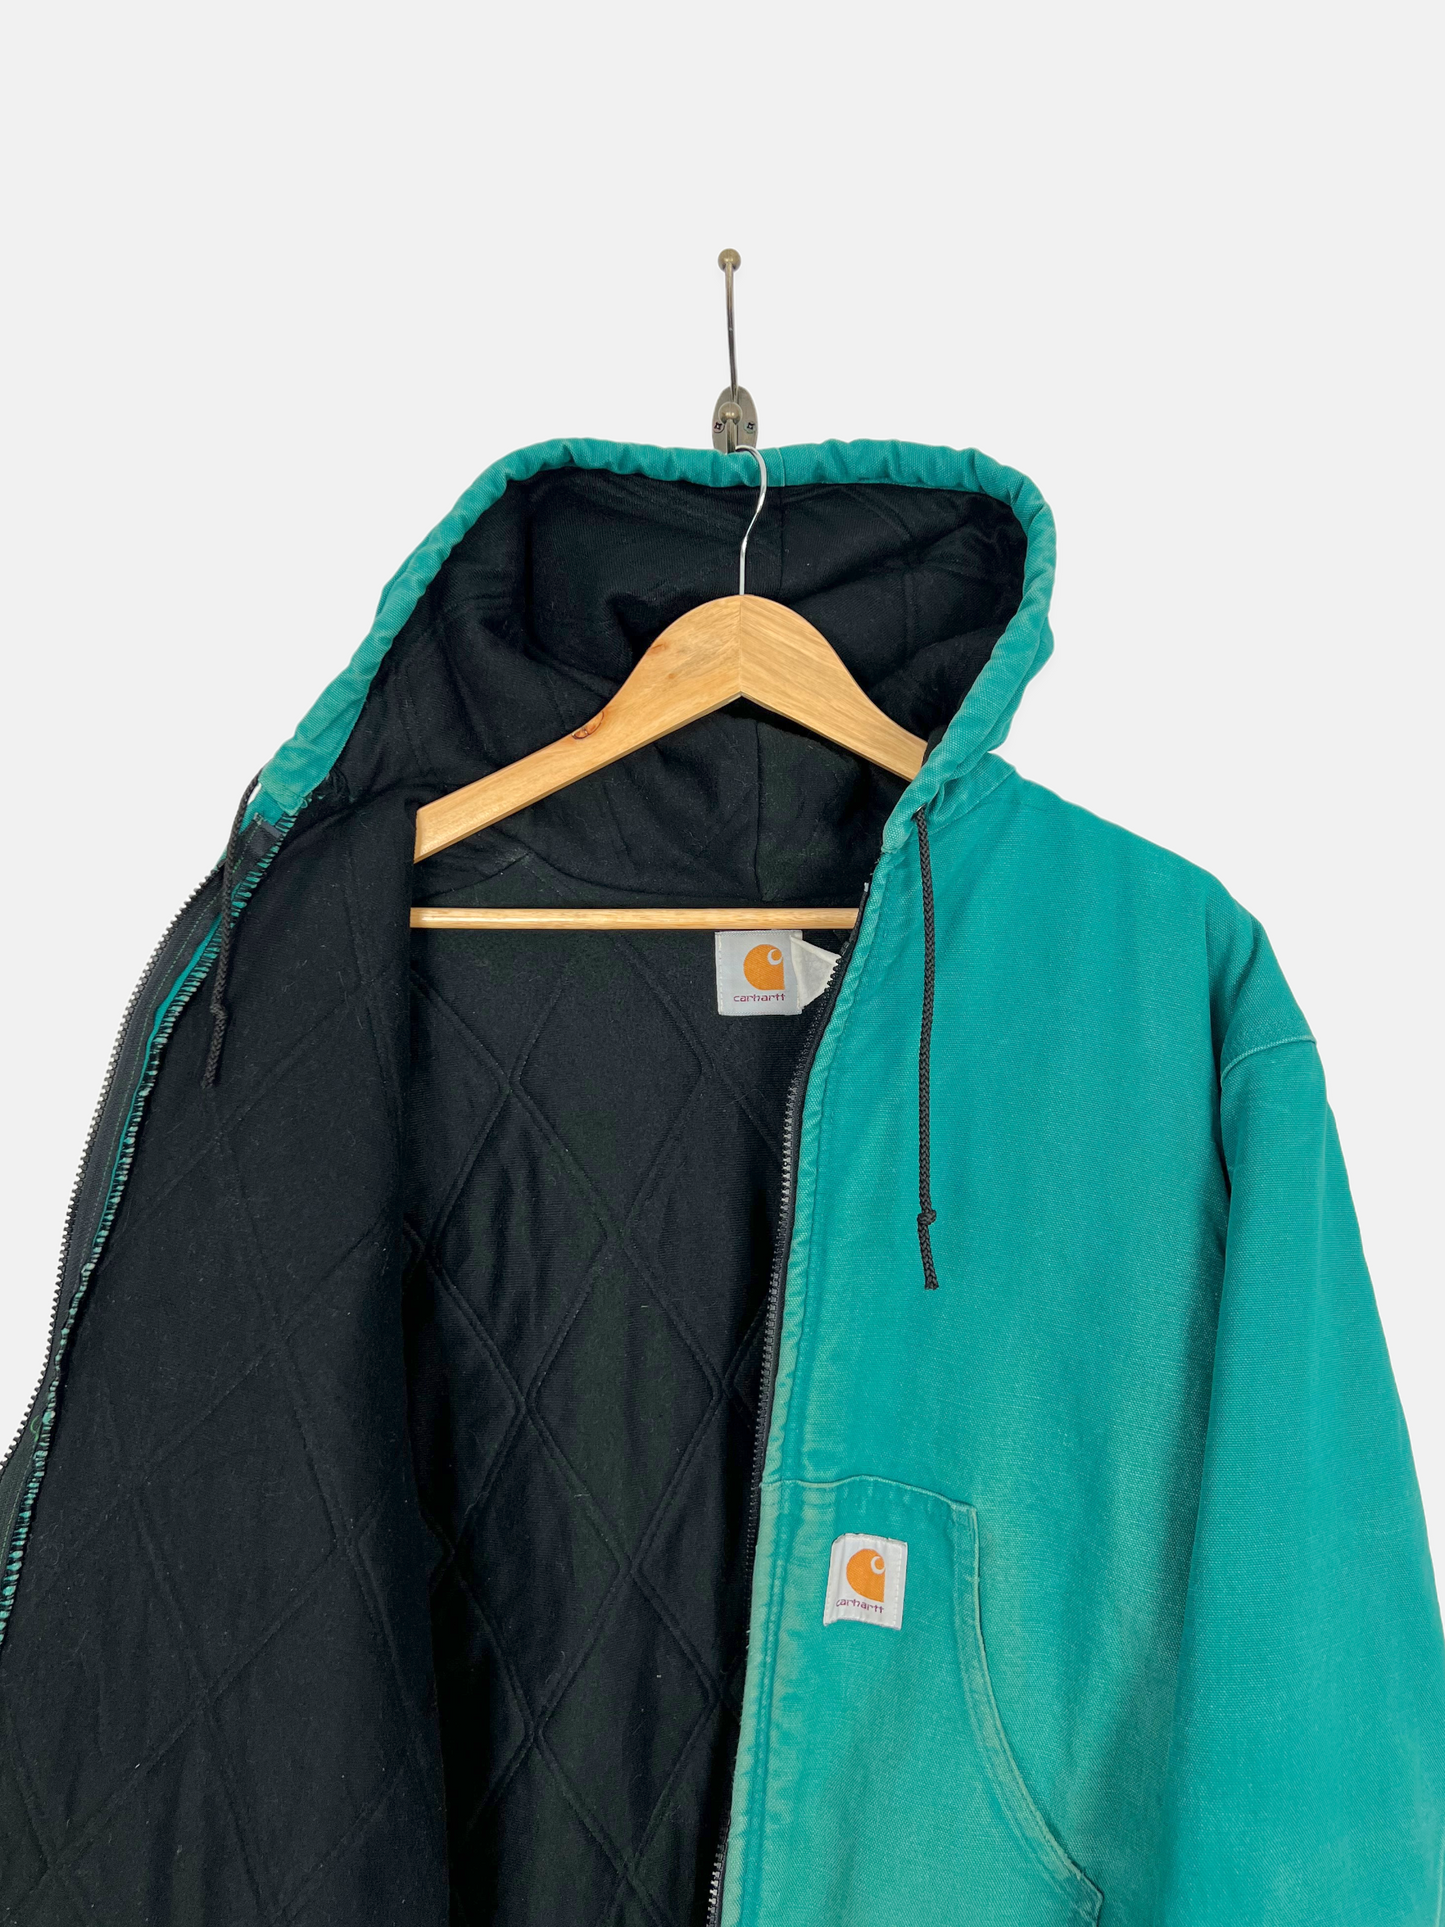 90's Carhartt Heavy Duty Vintage Jacket with Hood Size M